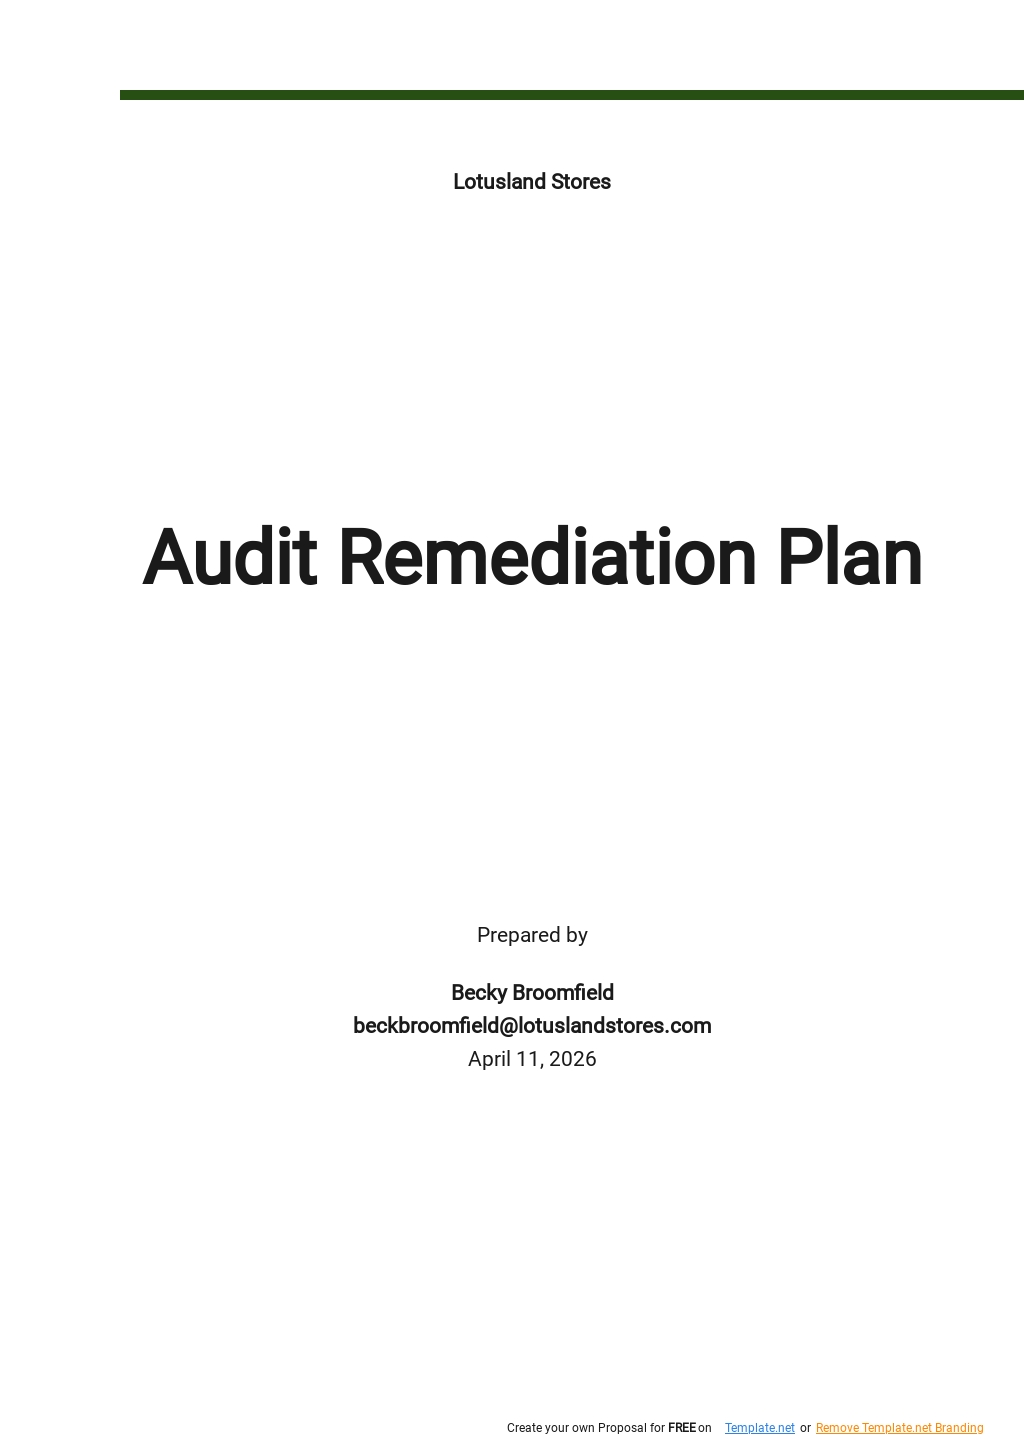 Audit Remediation Plan Template